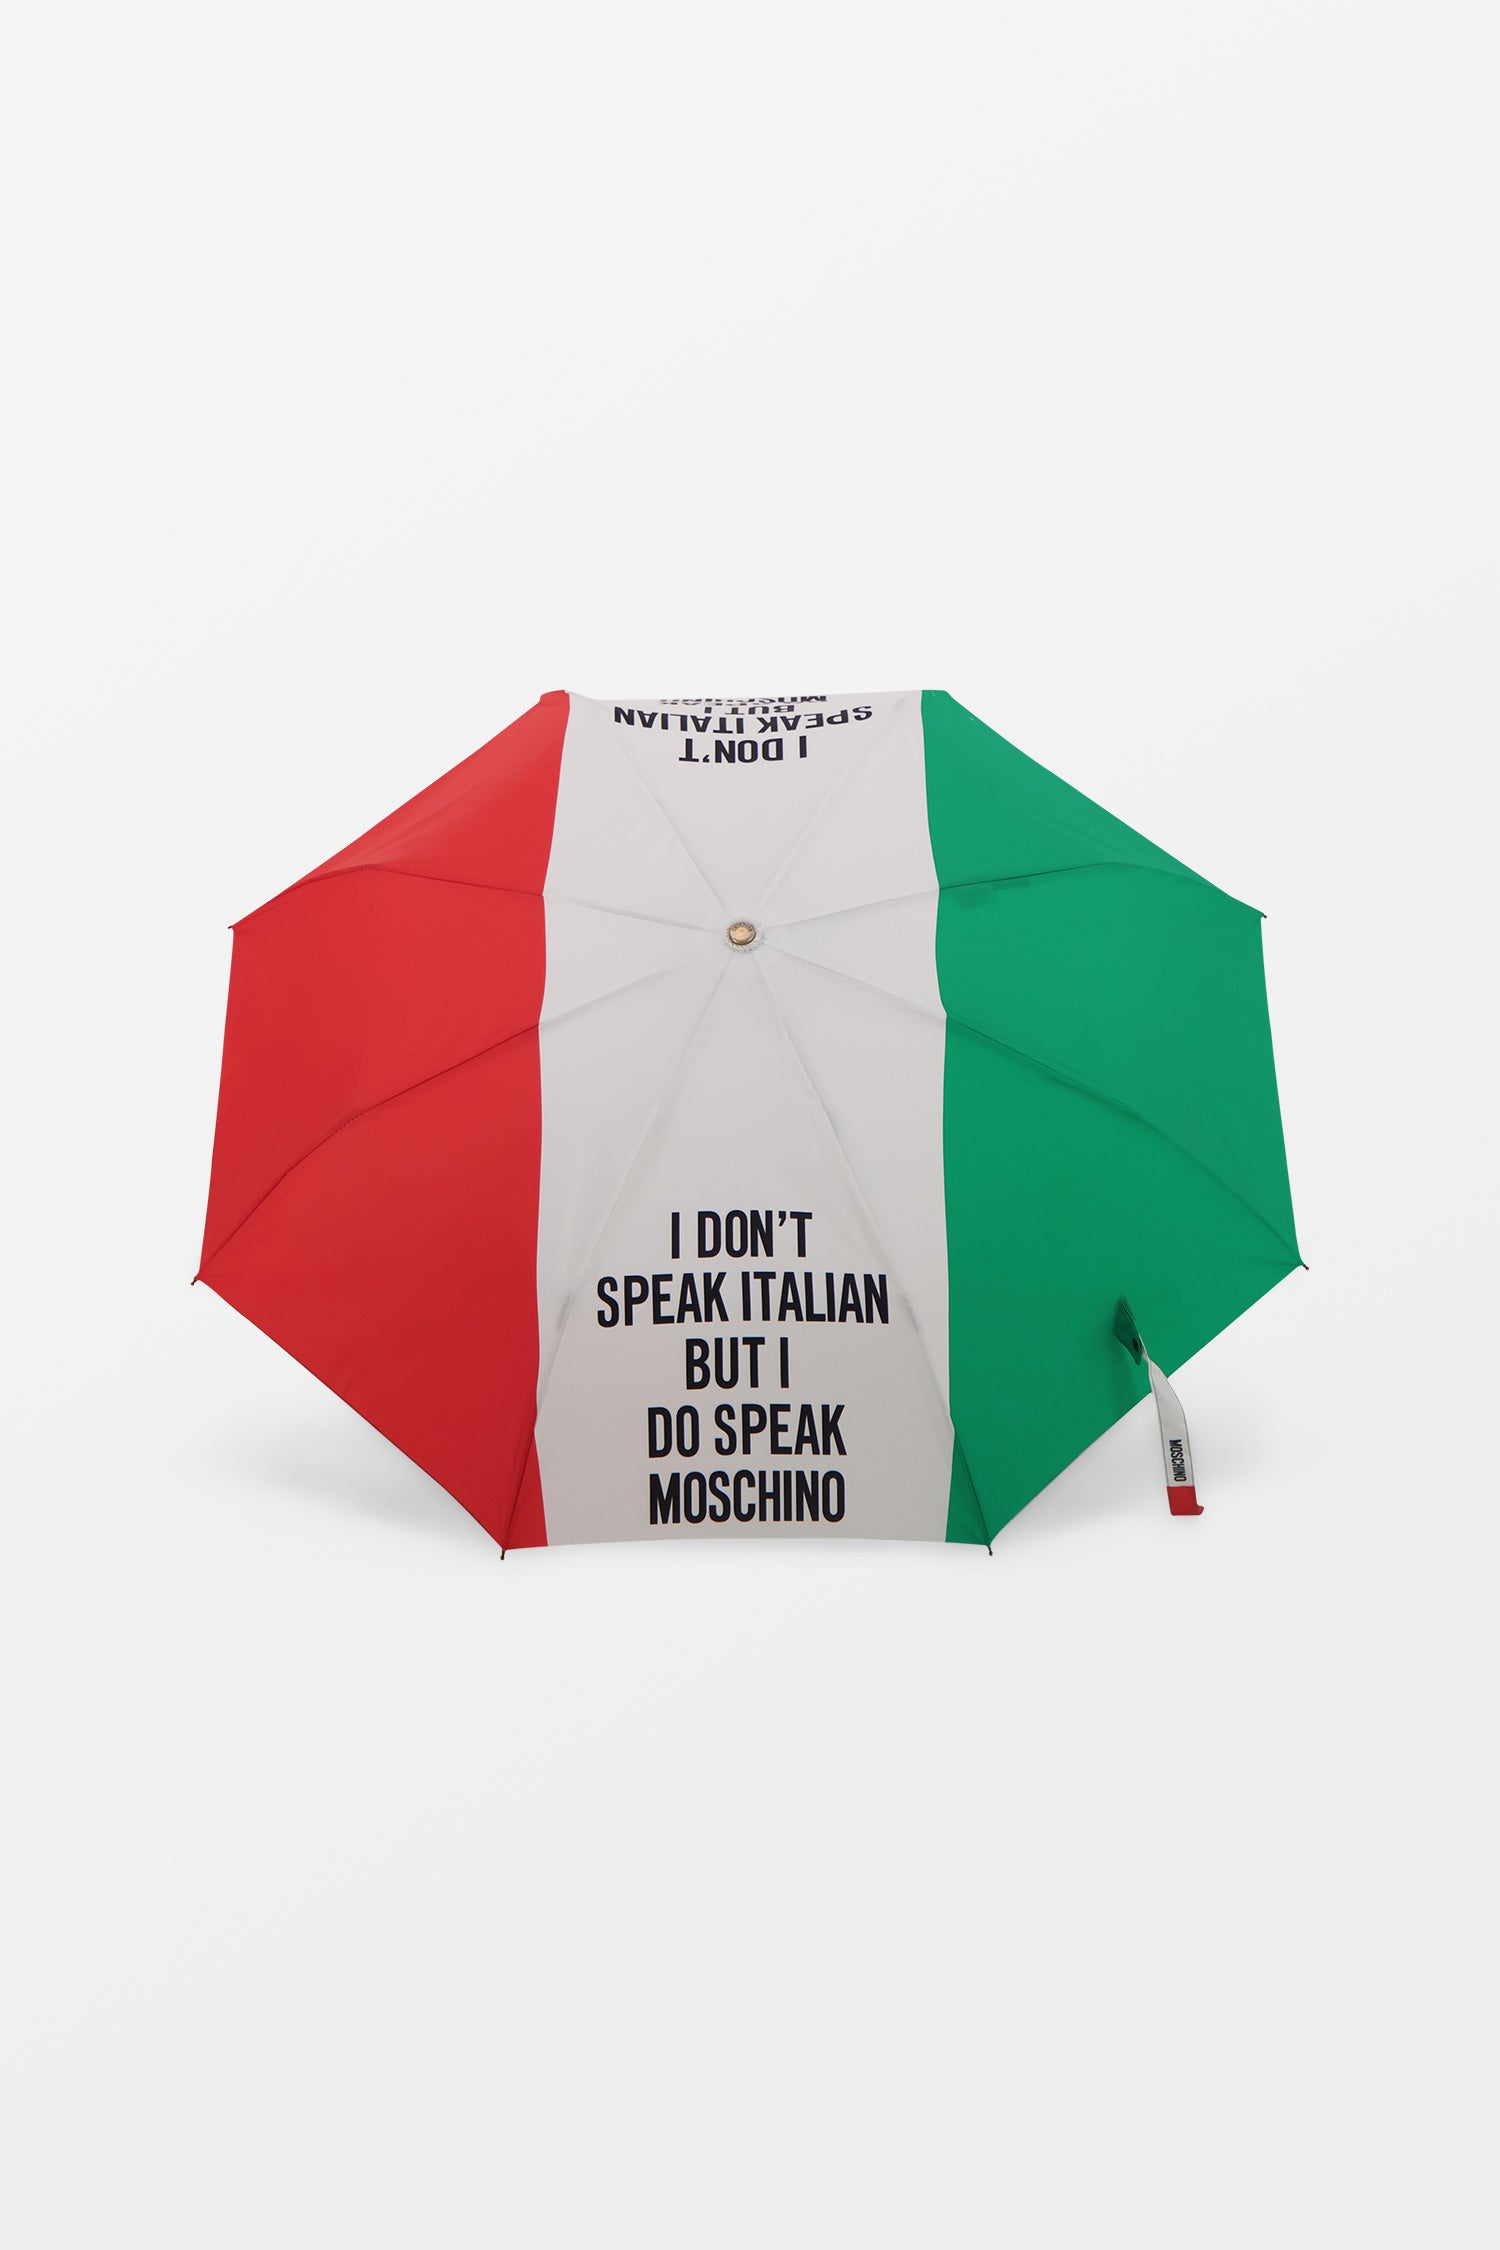 Moschino Speak Moschino Multicolor Umbrella